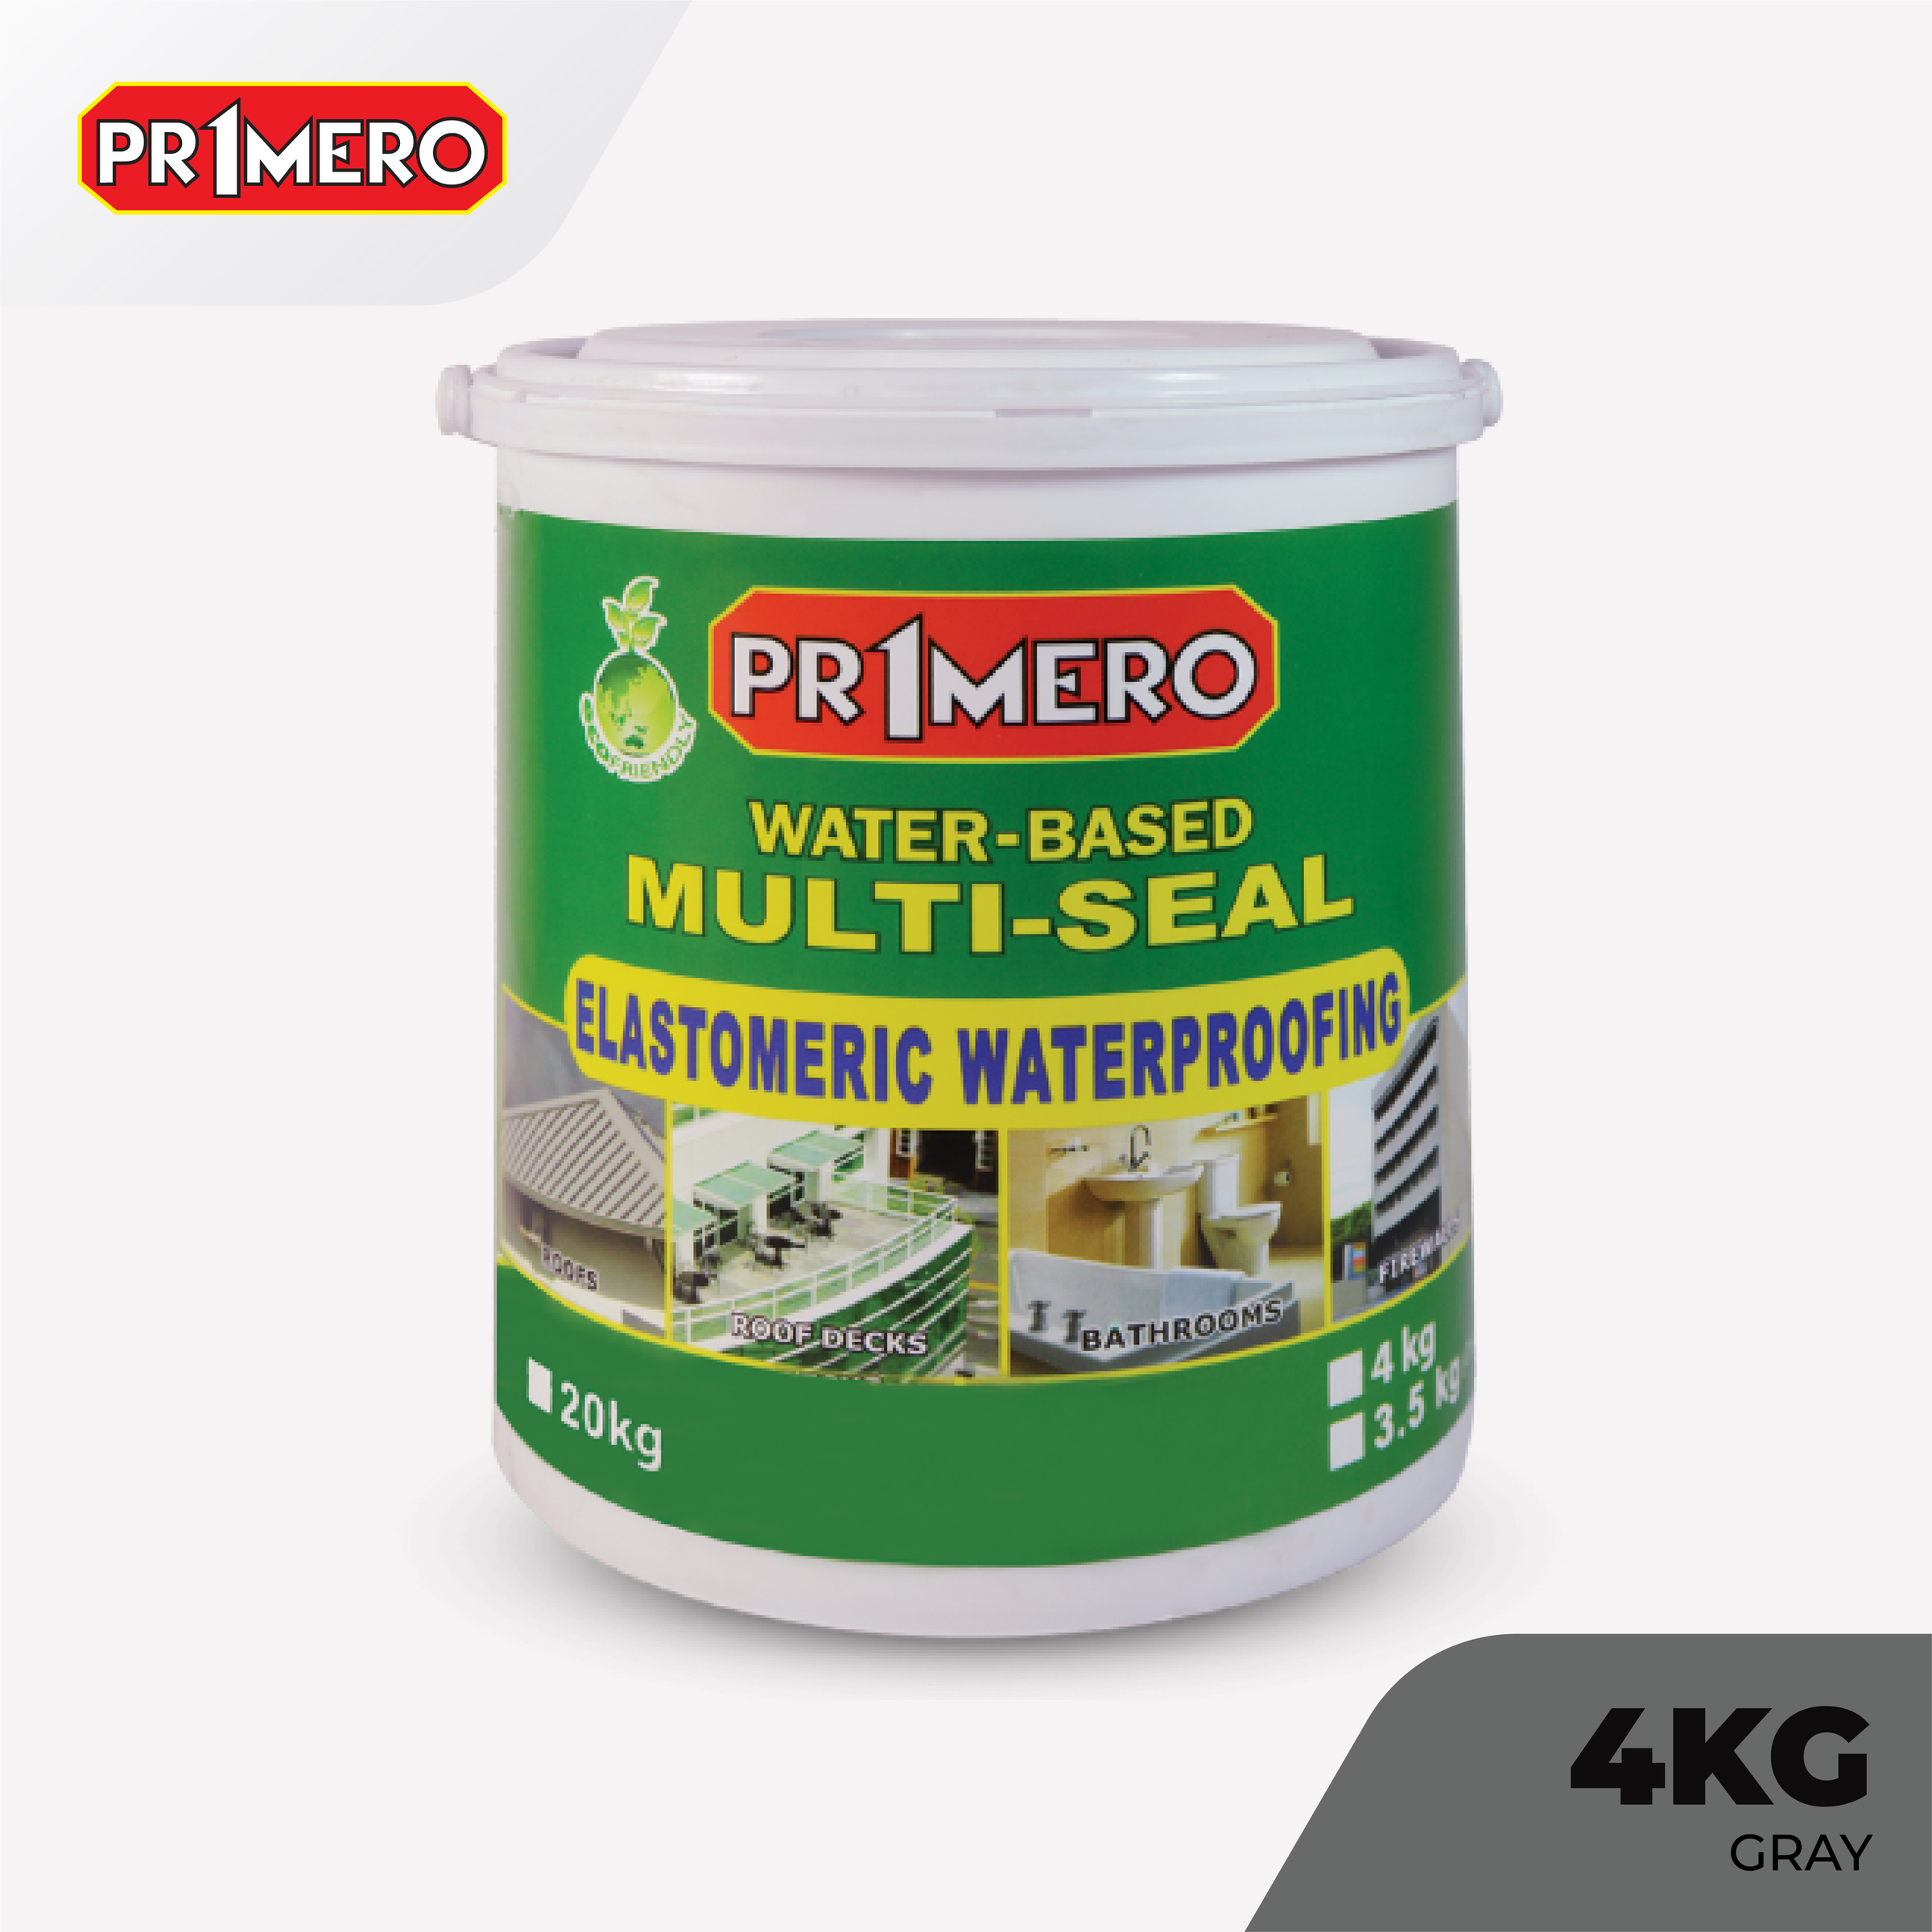 Primero Multi-Seal Elastomeric Waterproofing Sealant Grey - 4Kg